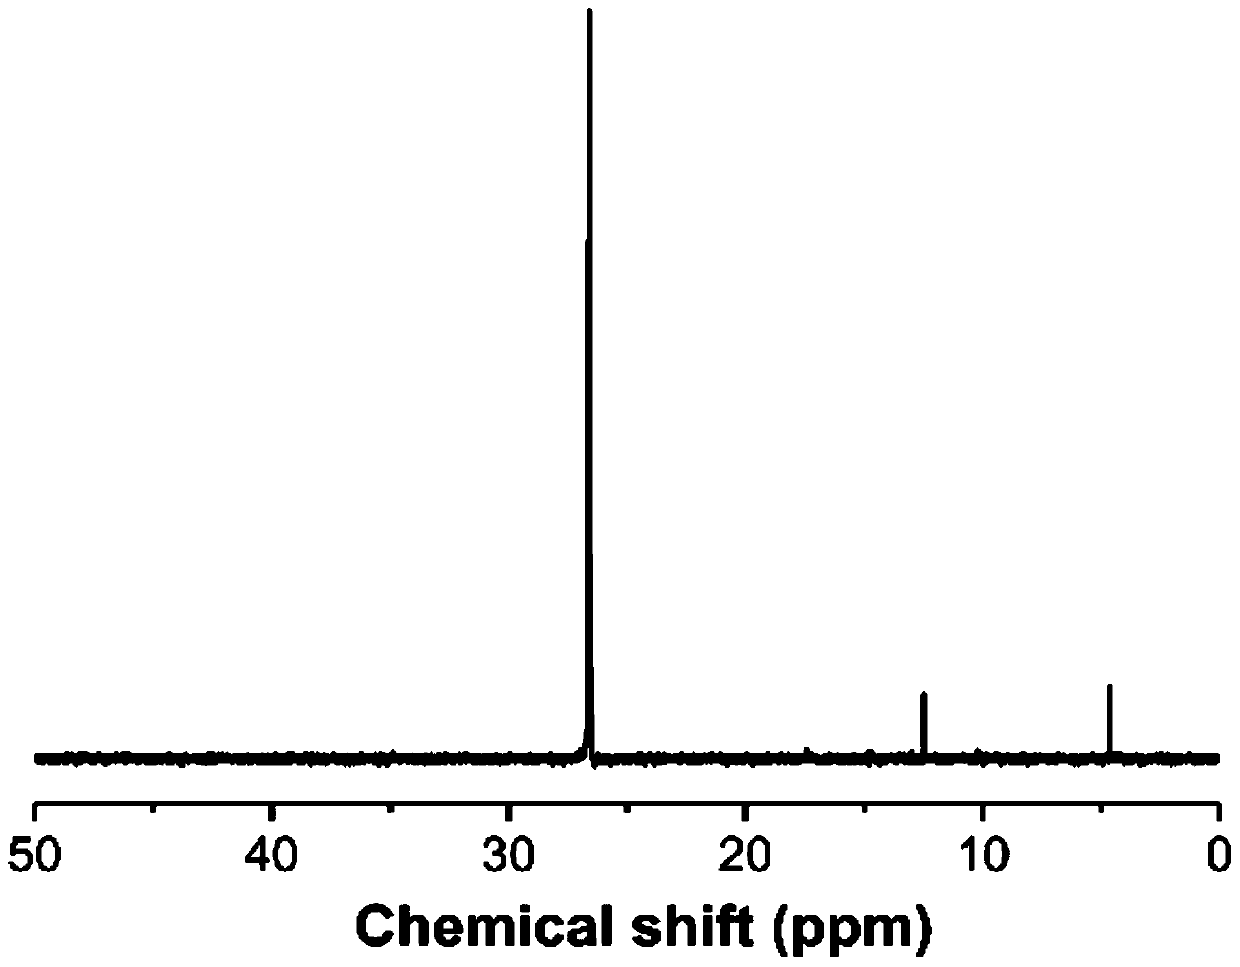 Phosphorus and nitrogen oligomer flame retardant and preparation method thereof